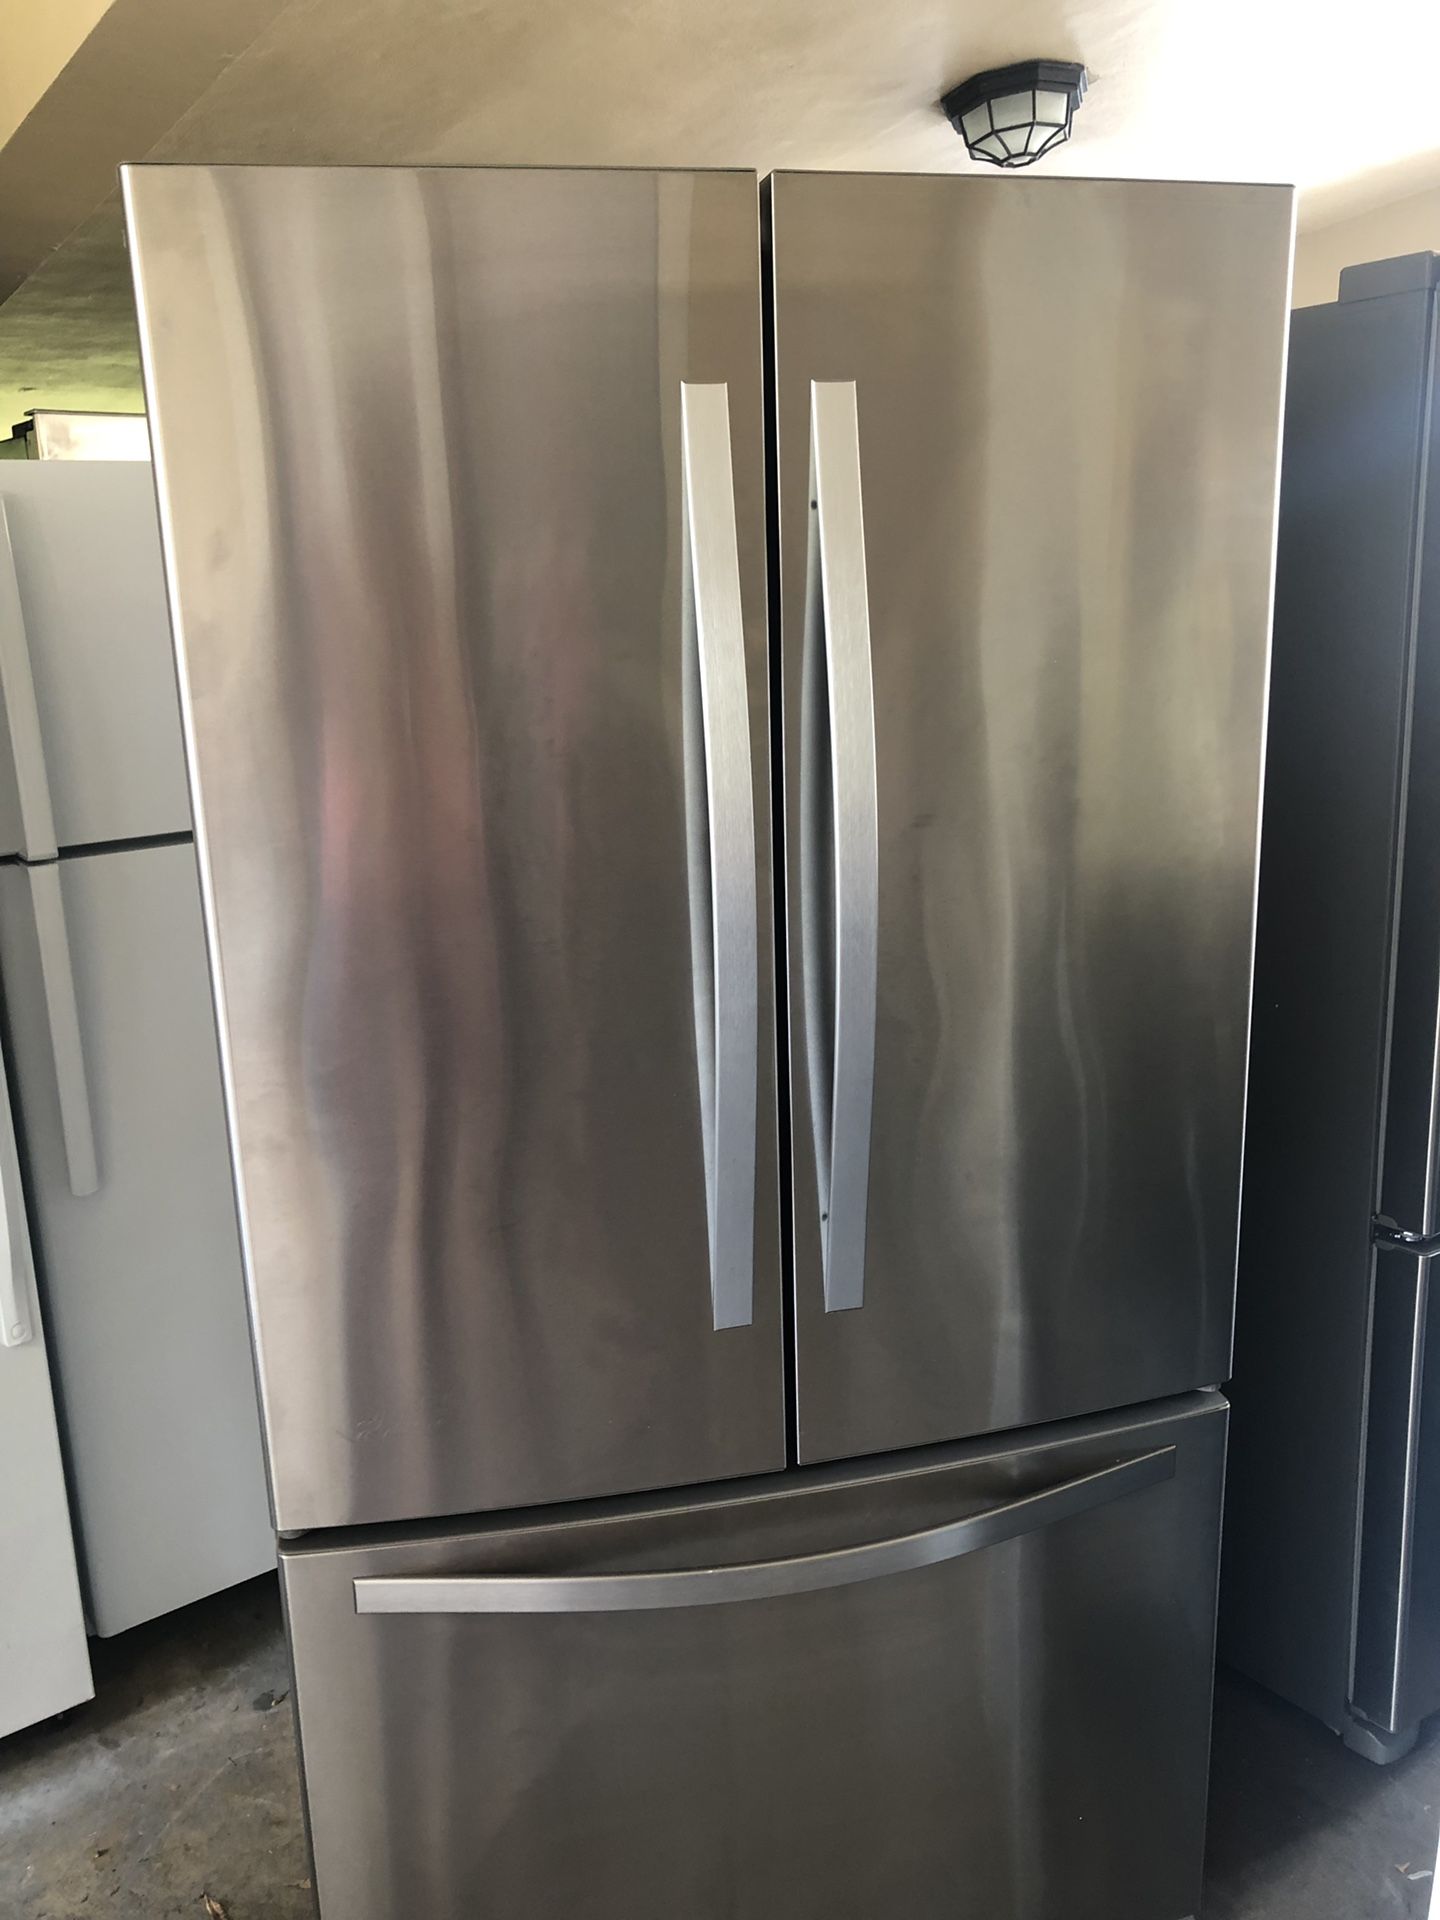 Whirlpool French door refrigerator